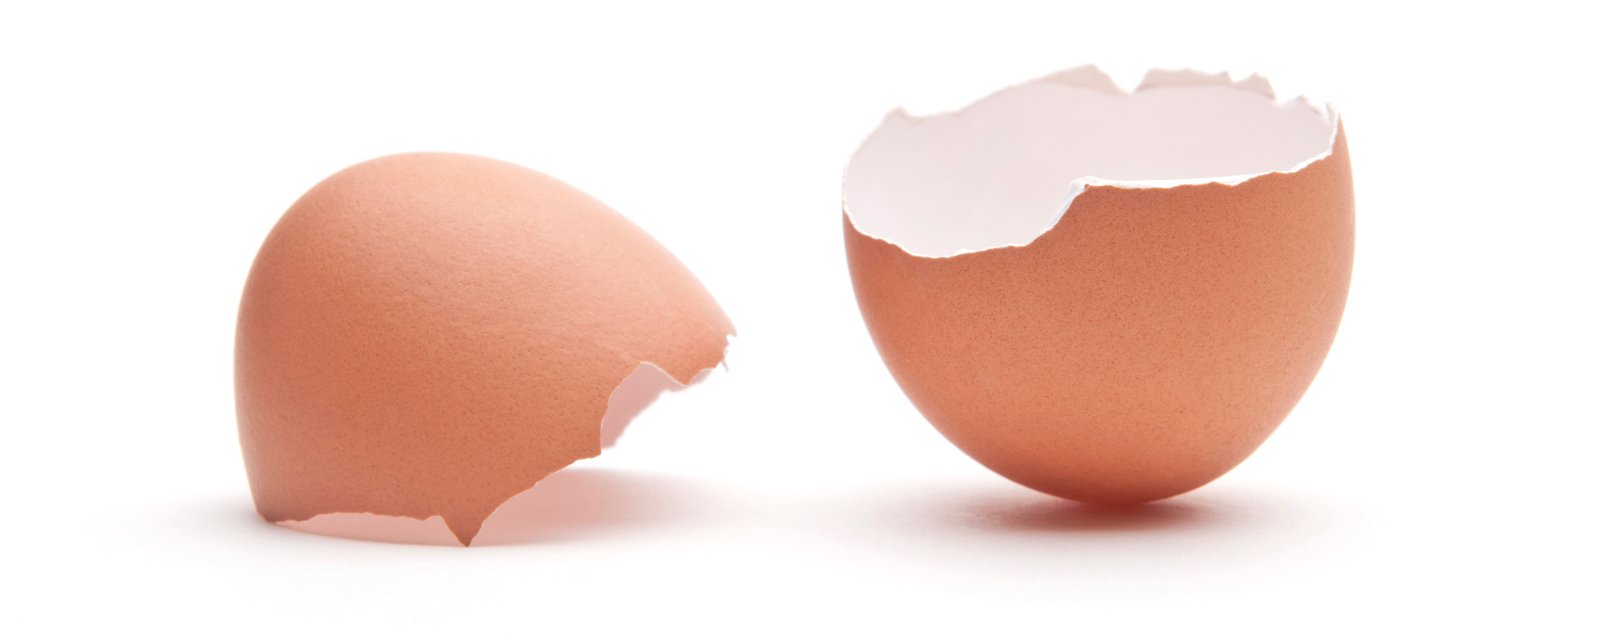 egg-shell-powder-has-health-benefits